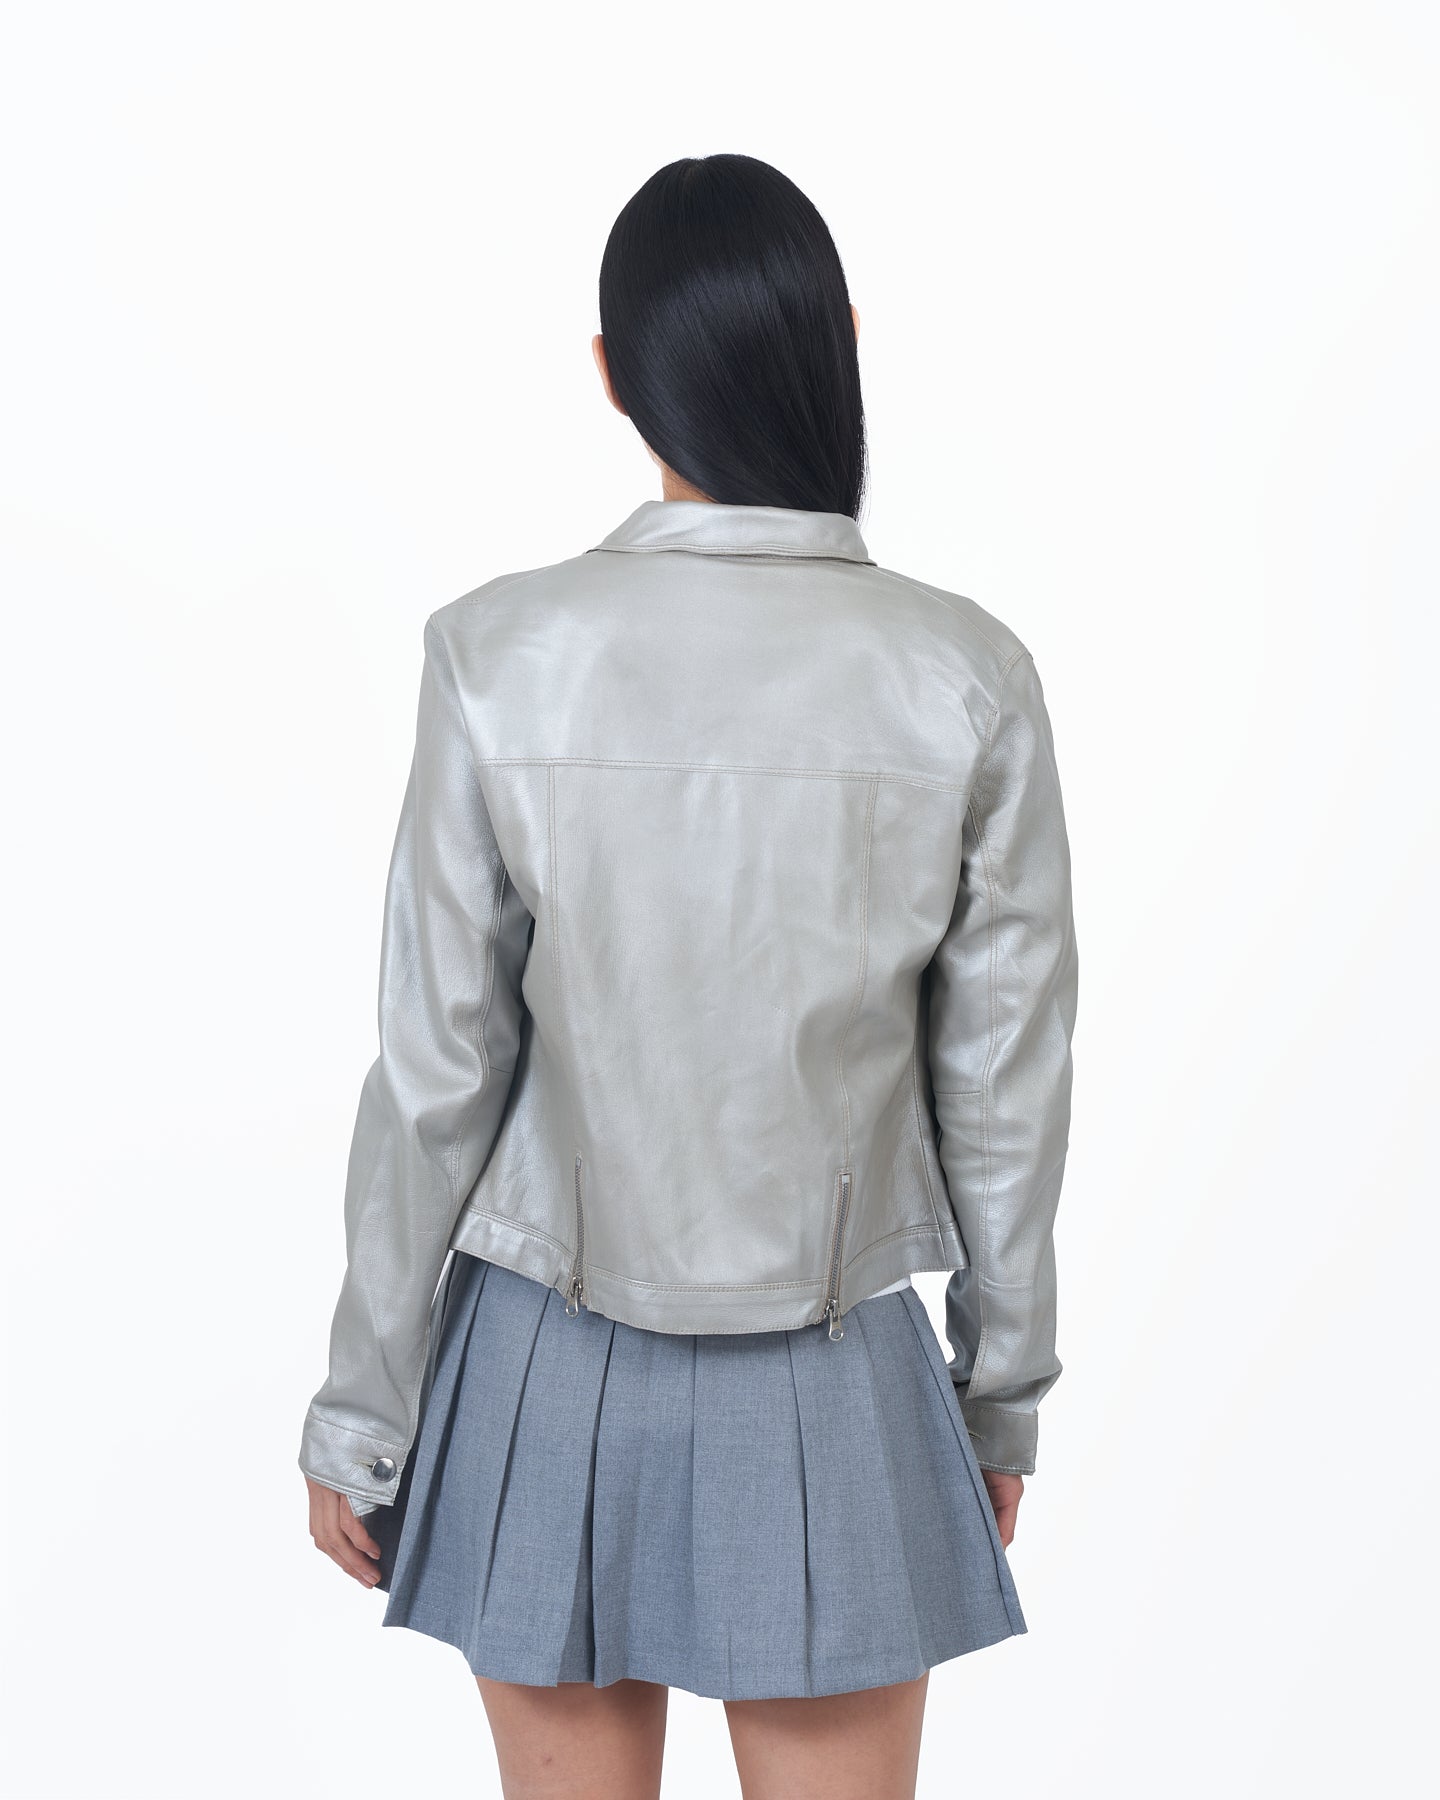 Alexa Metallic Leather Jacket Taupe